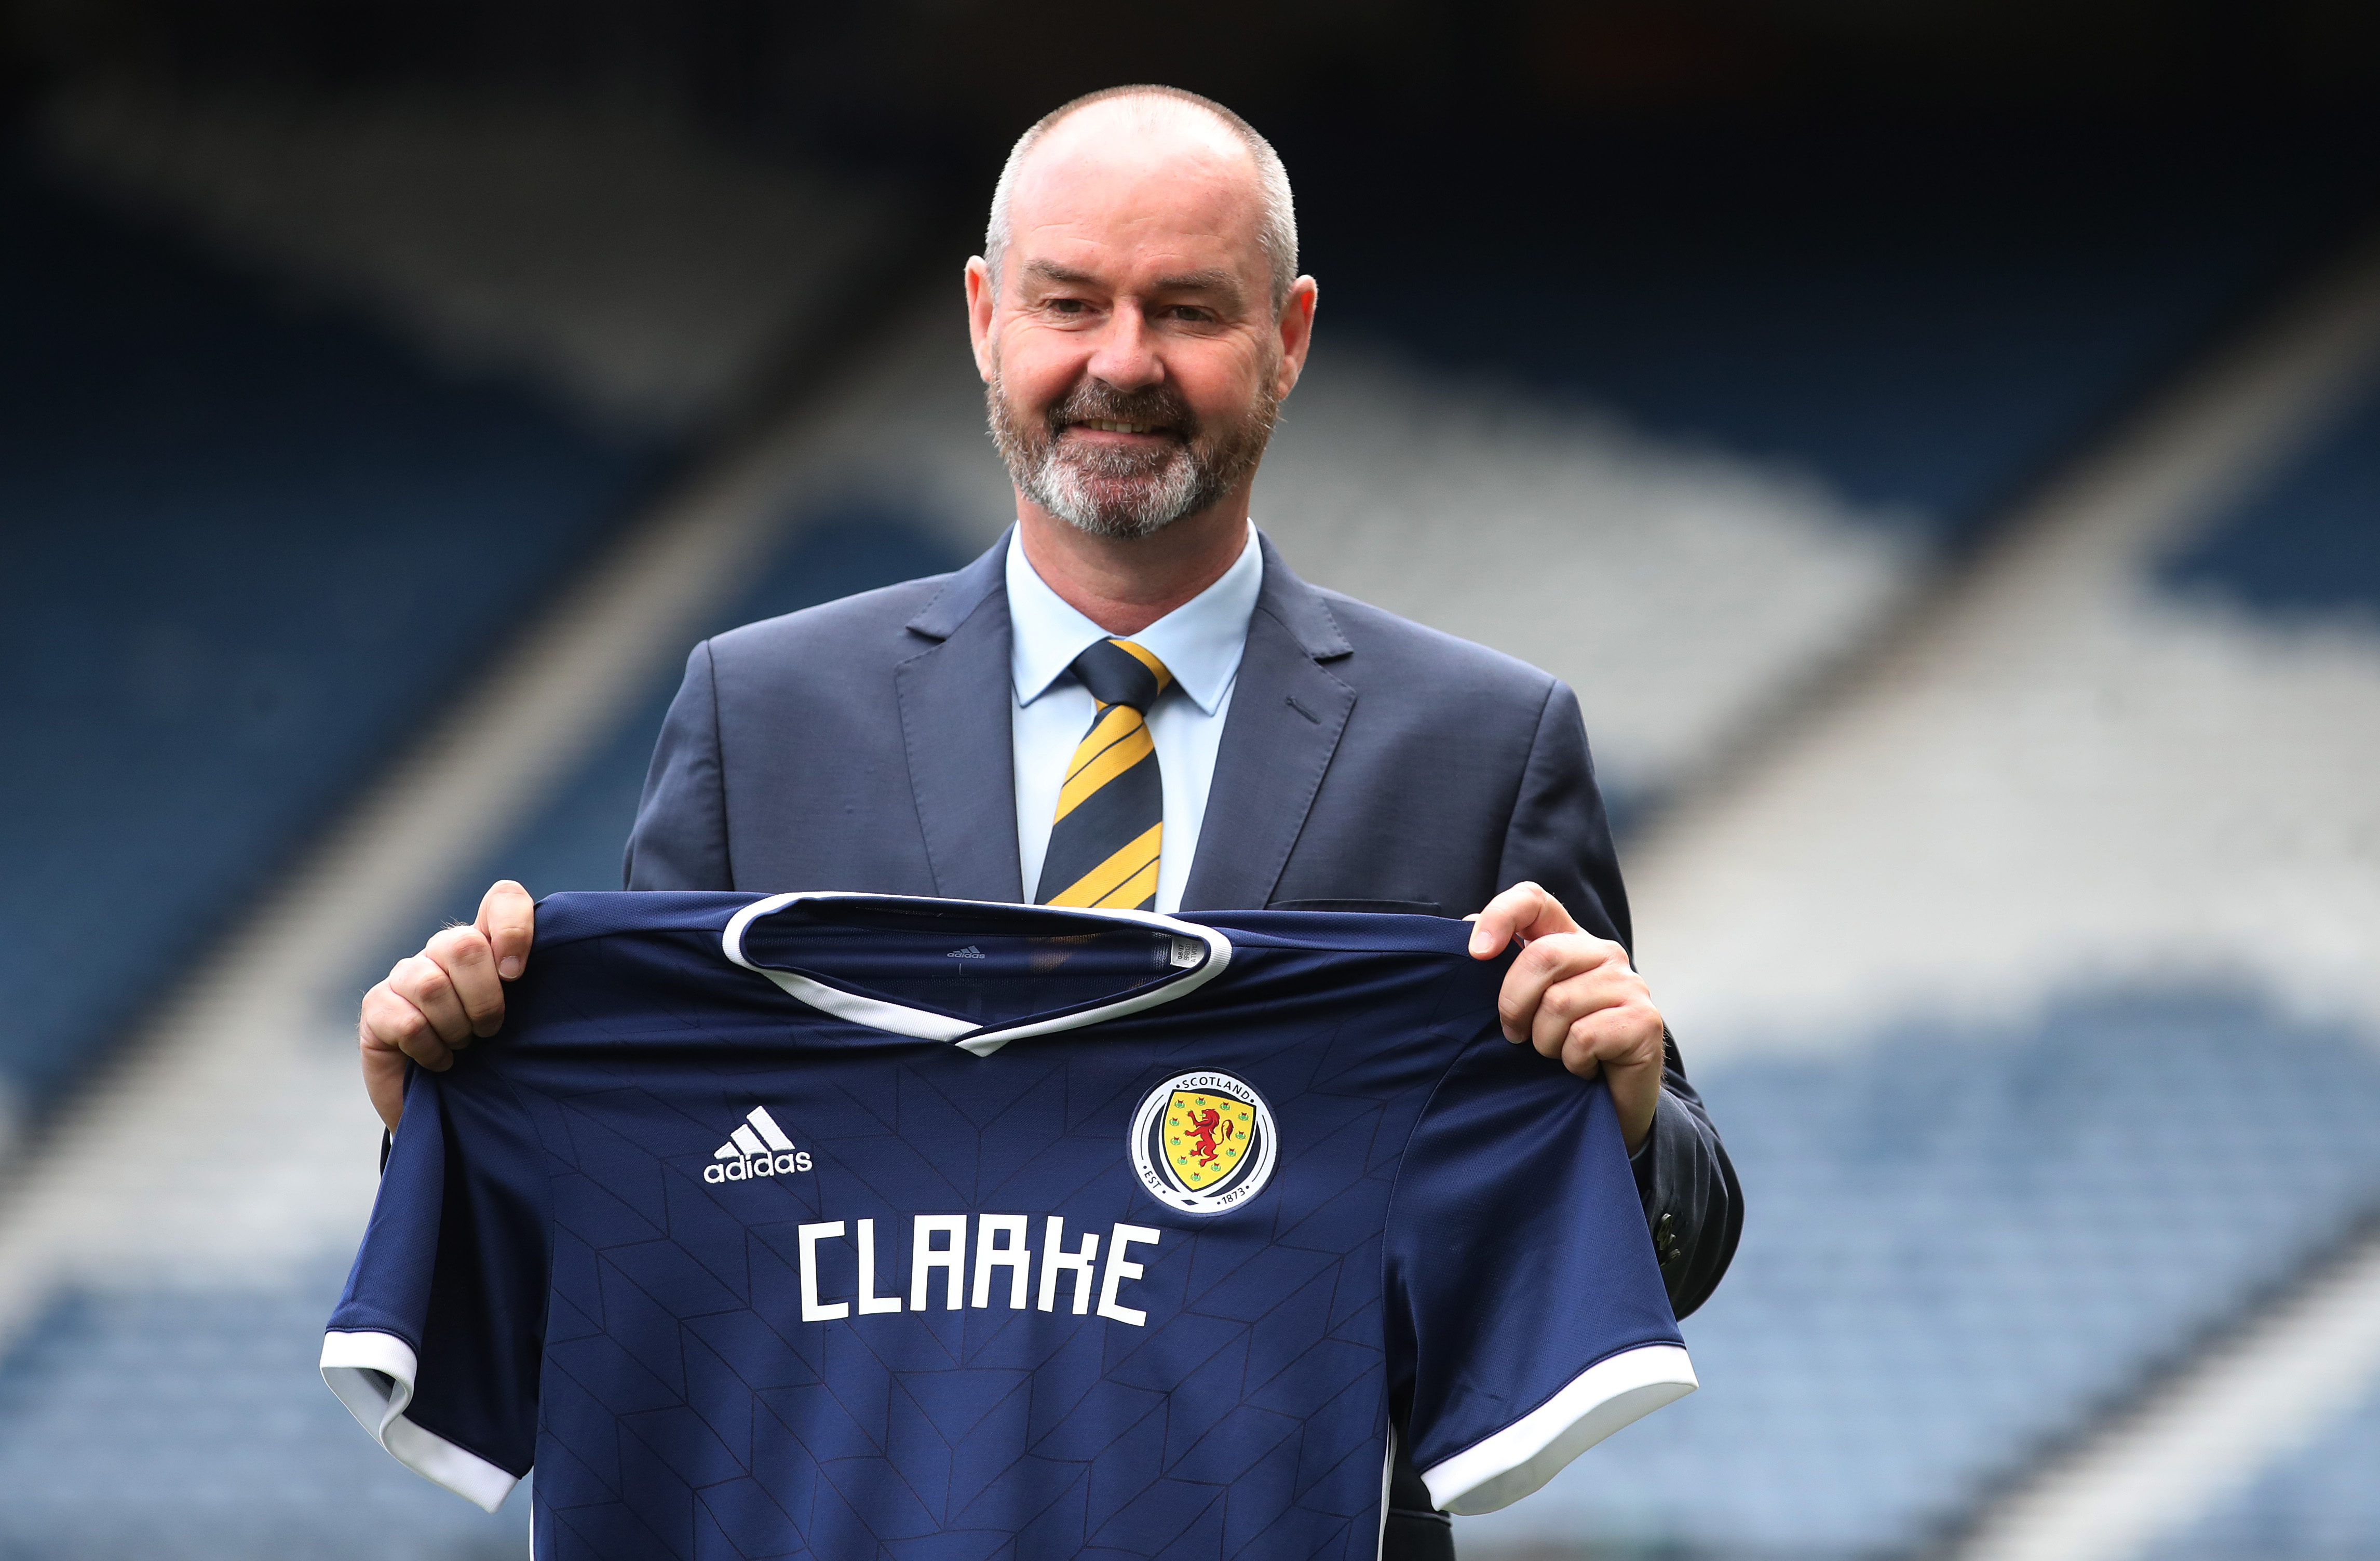 Steve Clarke is unveiled as the new Scotland National Team head coach at Hampden